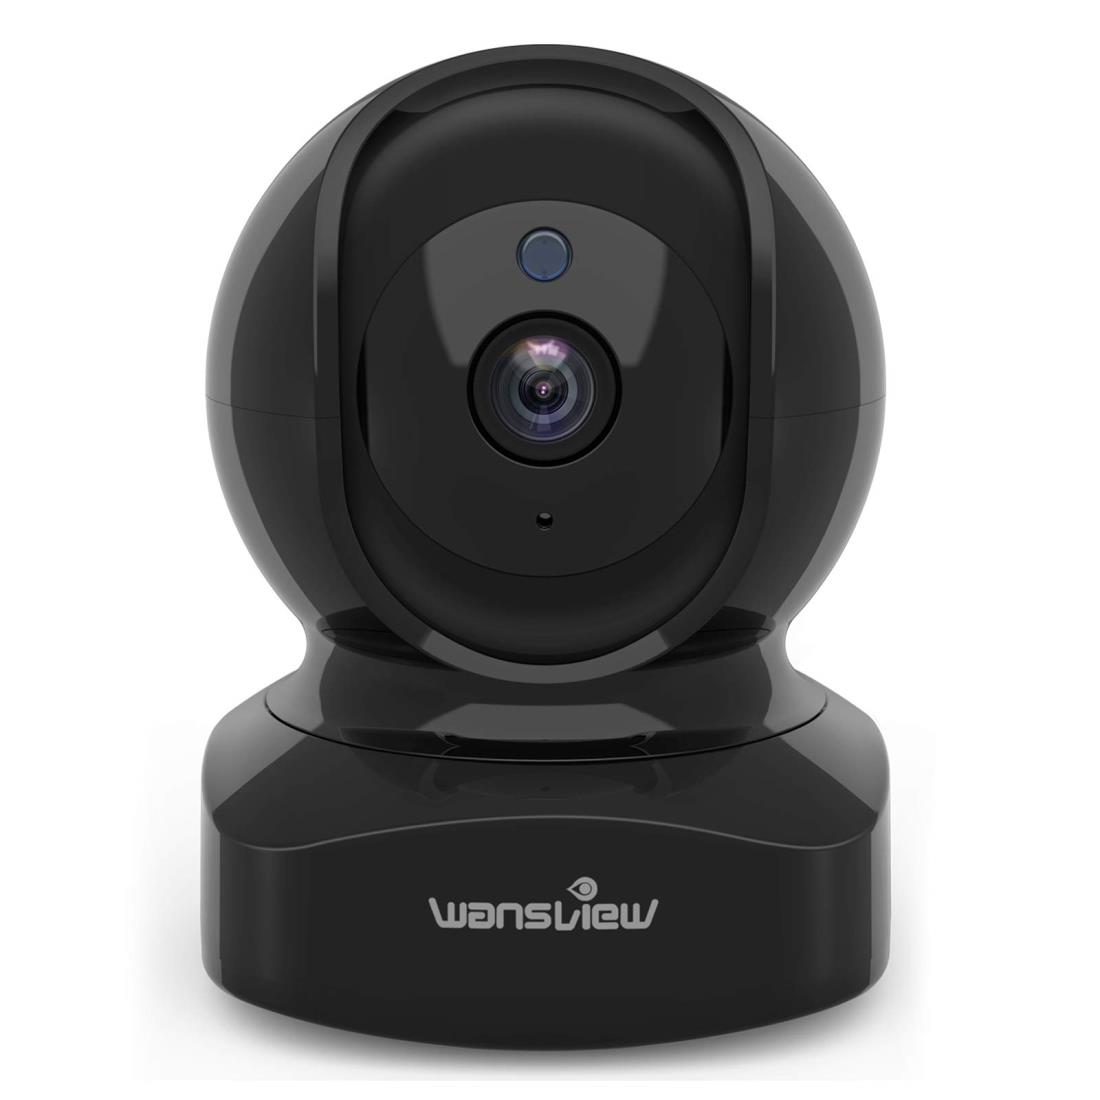 Wansview ネットワークカメラ 2K 300万画素 ベイビーモニター 2.4GHzWiFi接続 IPカメラ ワイヤレス屋内防犯カメラ ペットカメラ ベビー老人ペット見守り 動体検知 双方向音声 録画可能 アプリ無料 Alexa対応